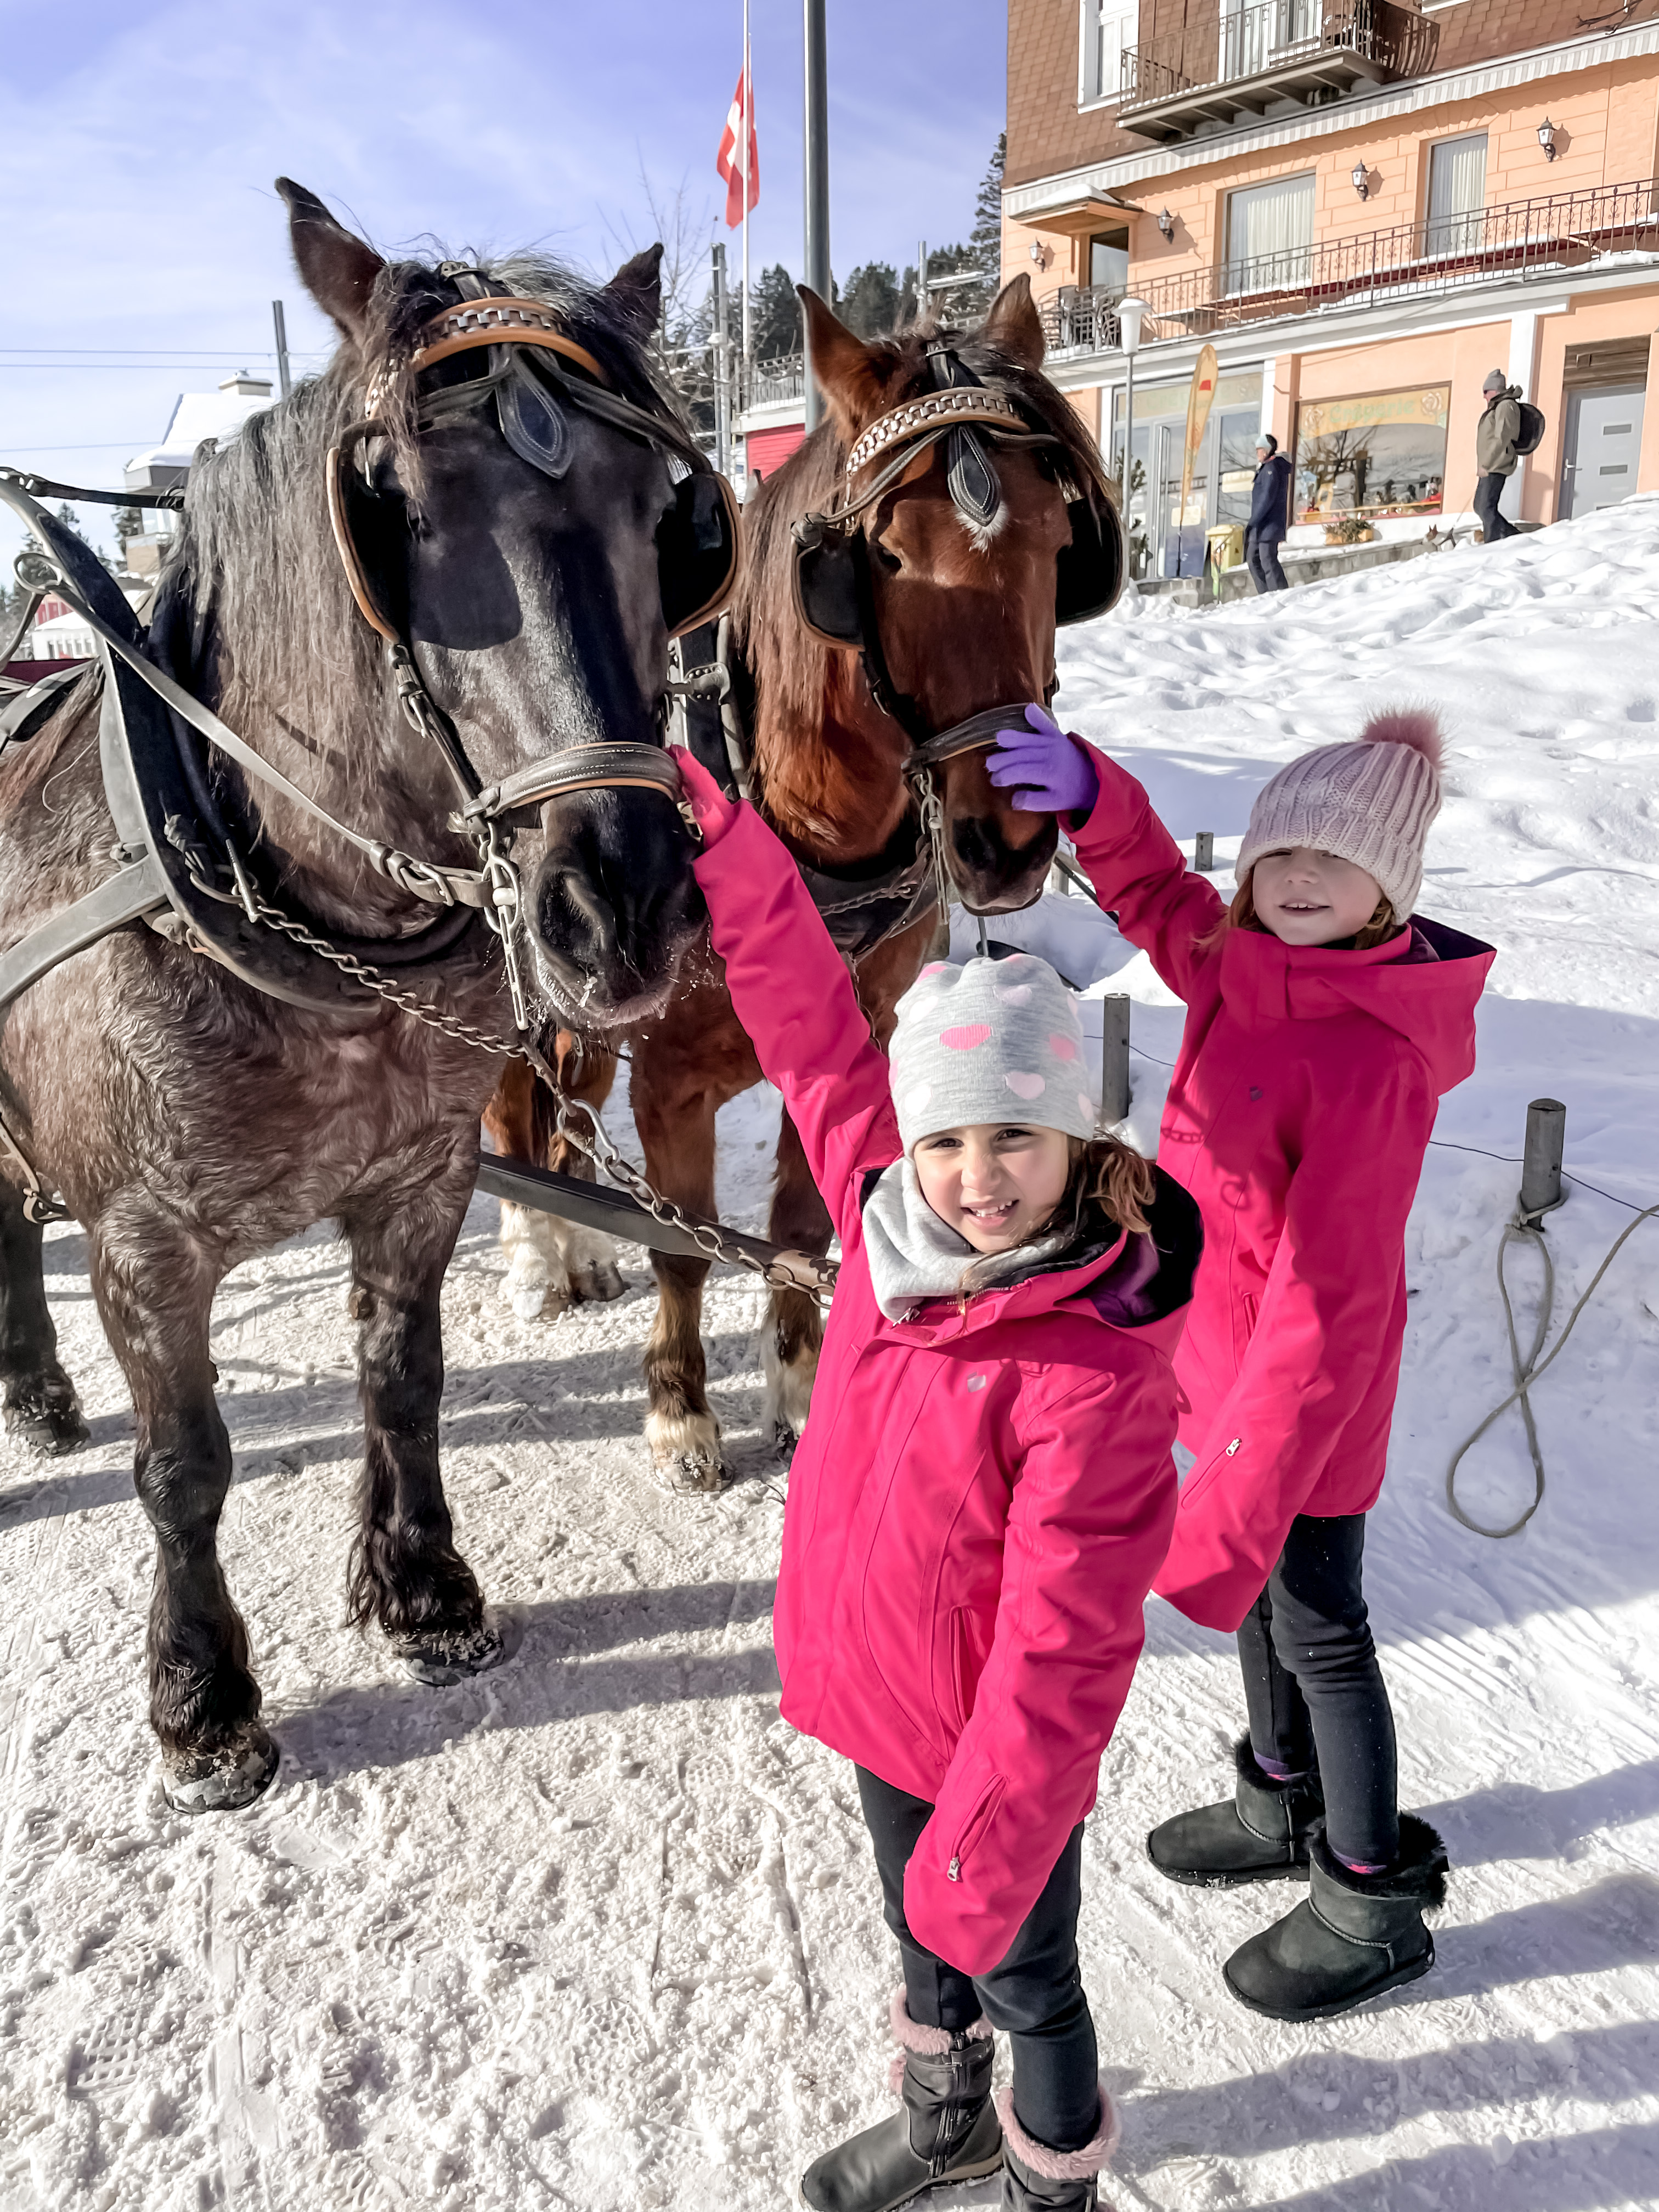 Rigi Kaltbad - Snow Much Fun on Mt. Rigi - Horses